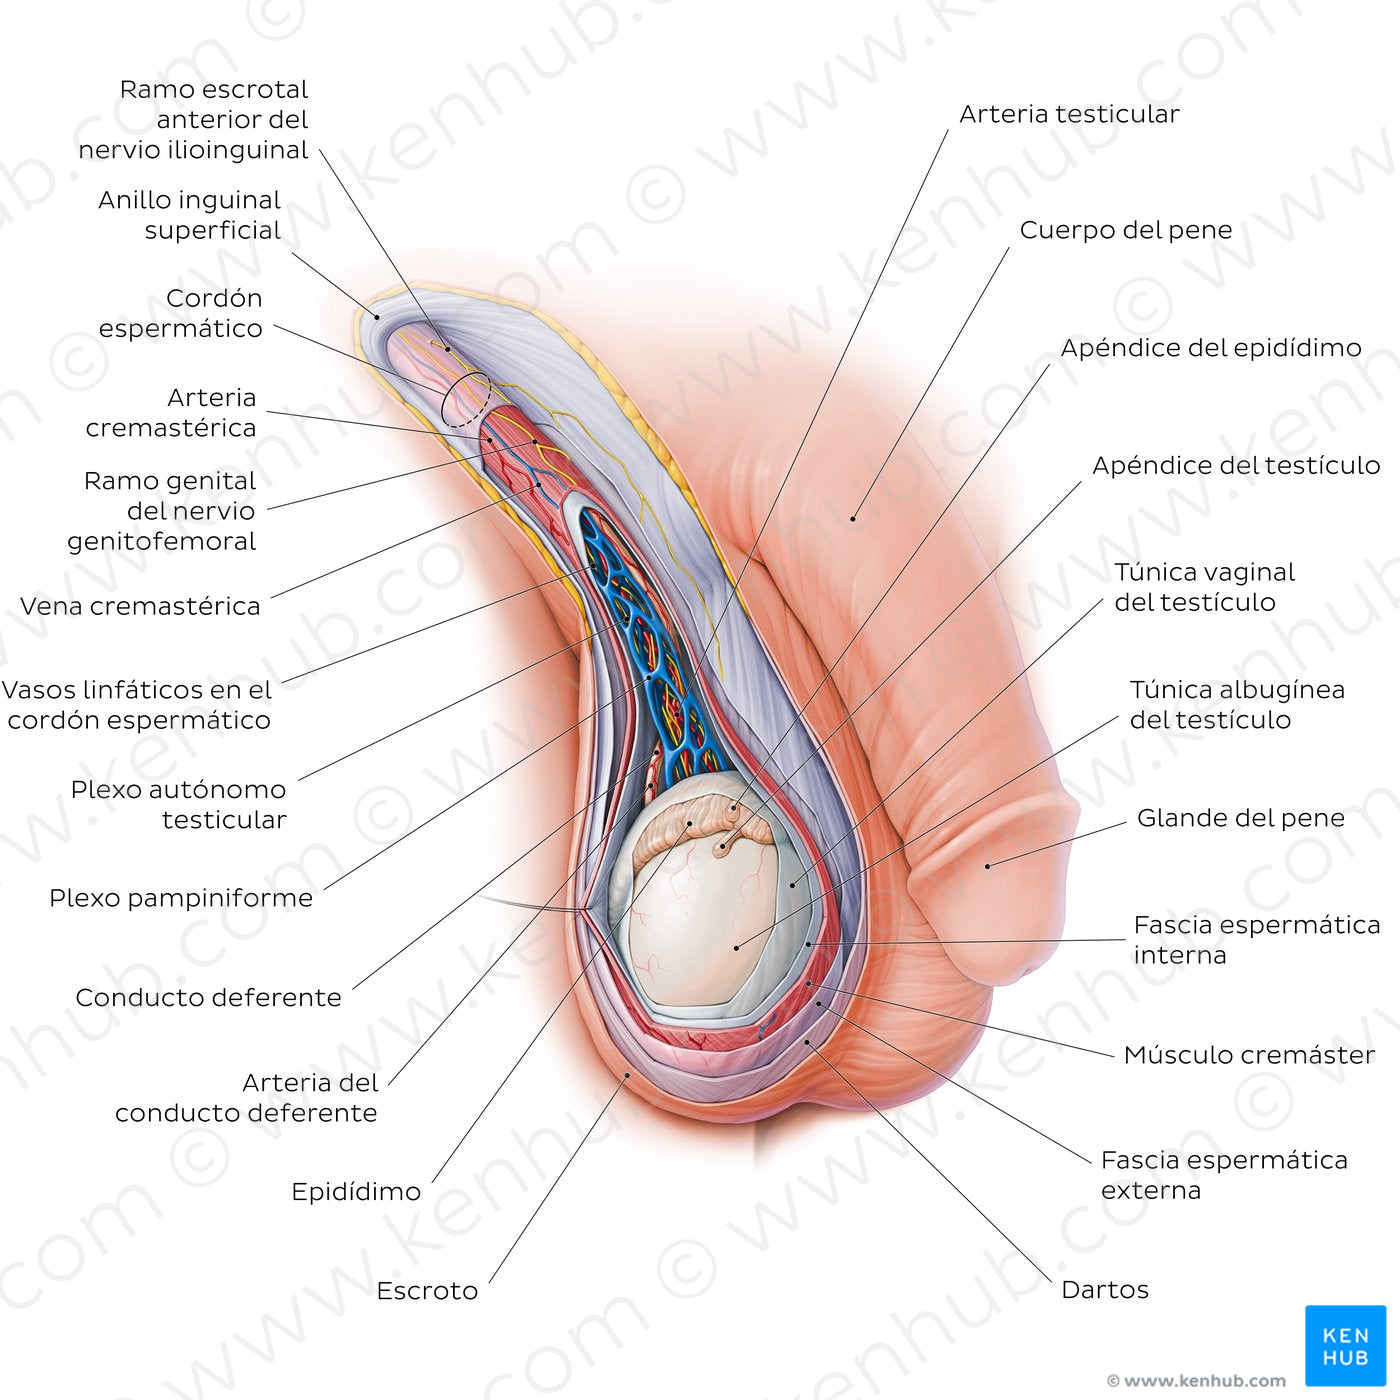 Scrotum and spermatic cord (Spanish)